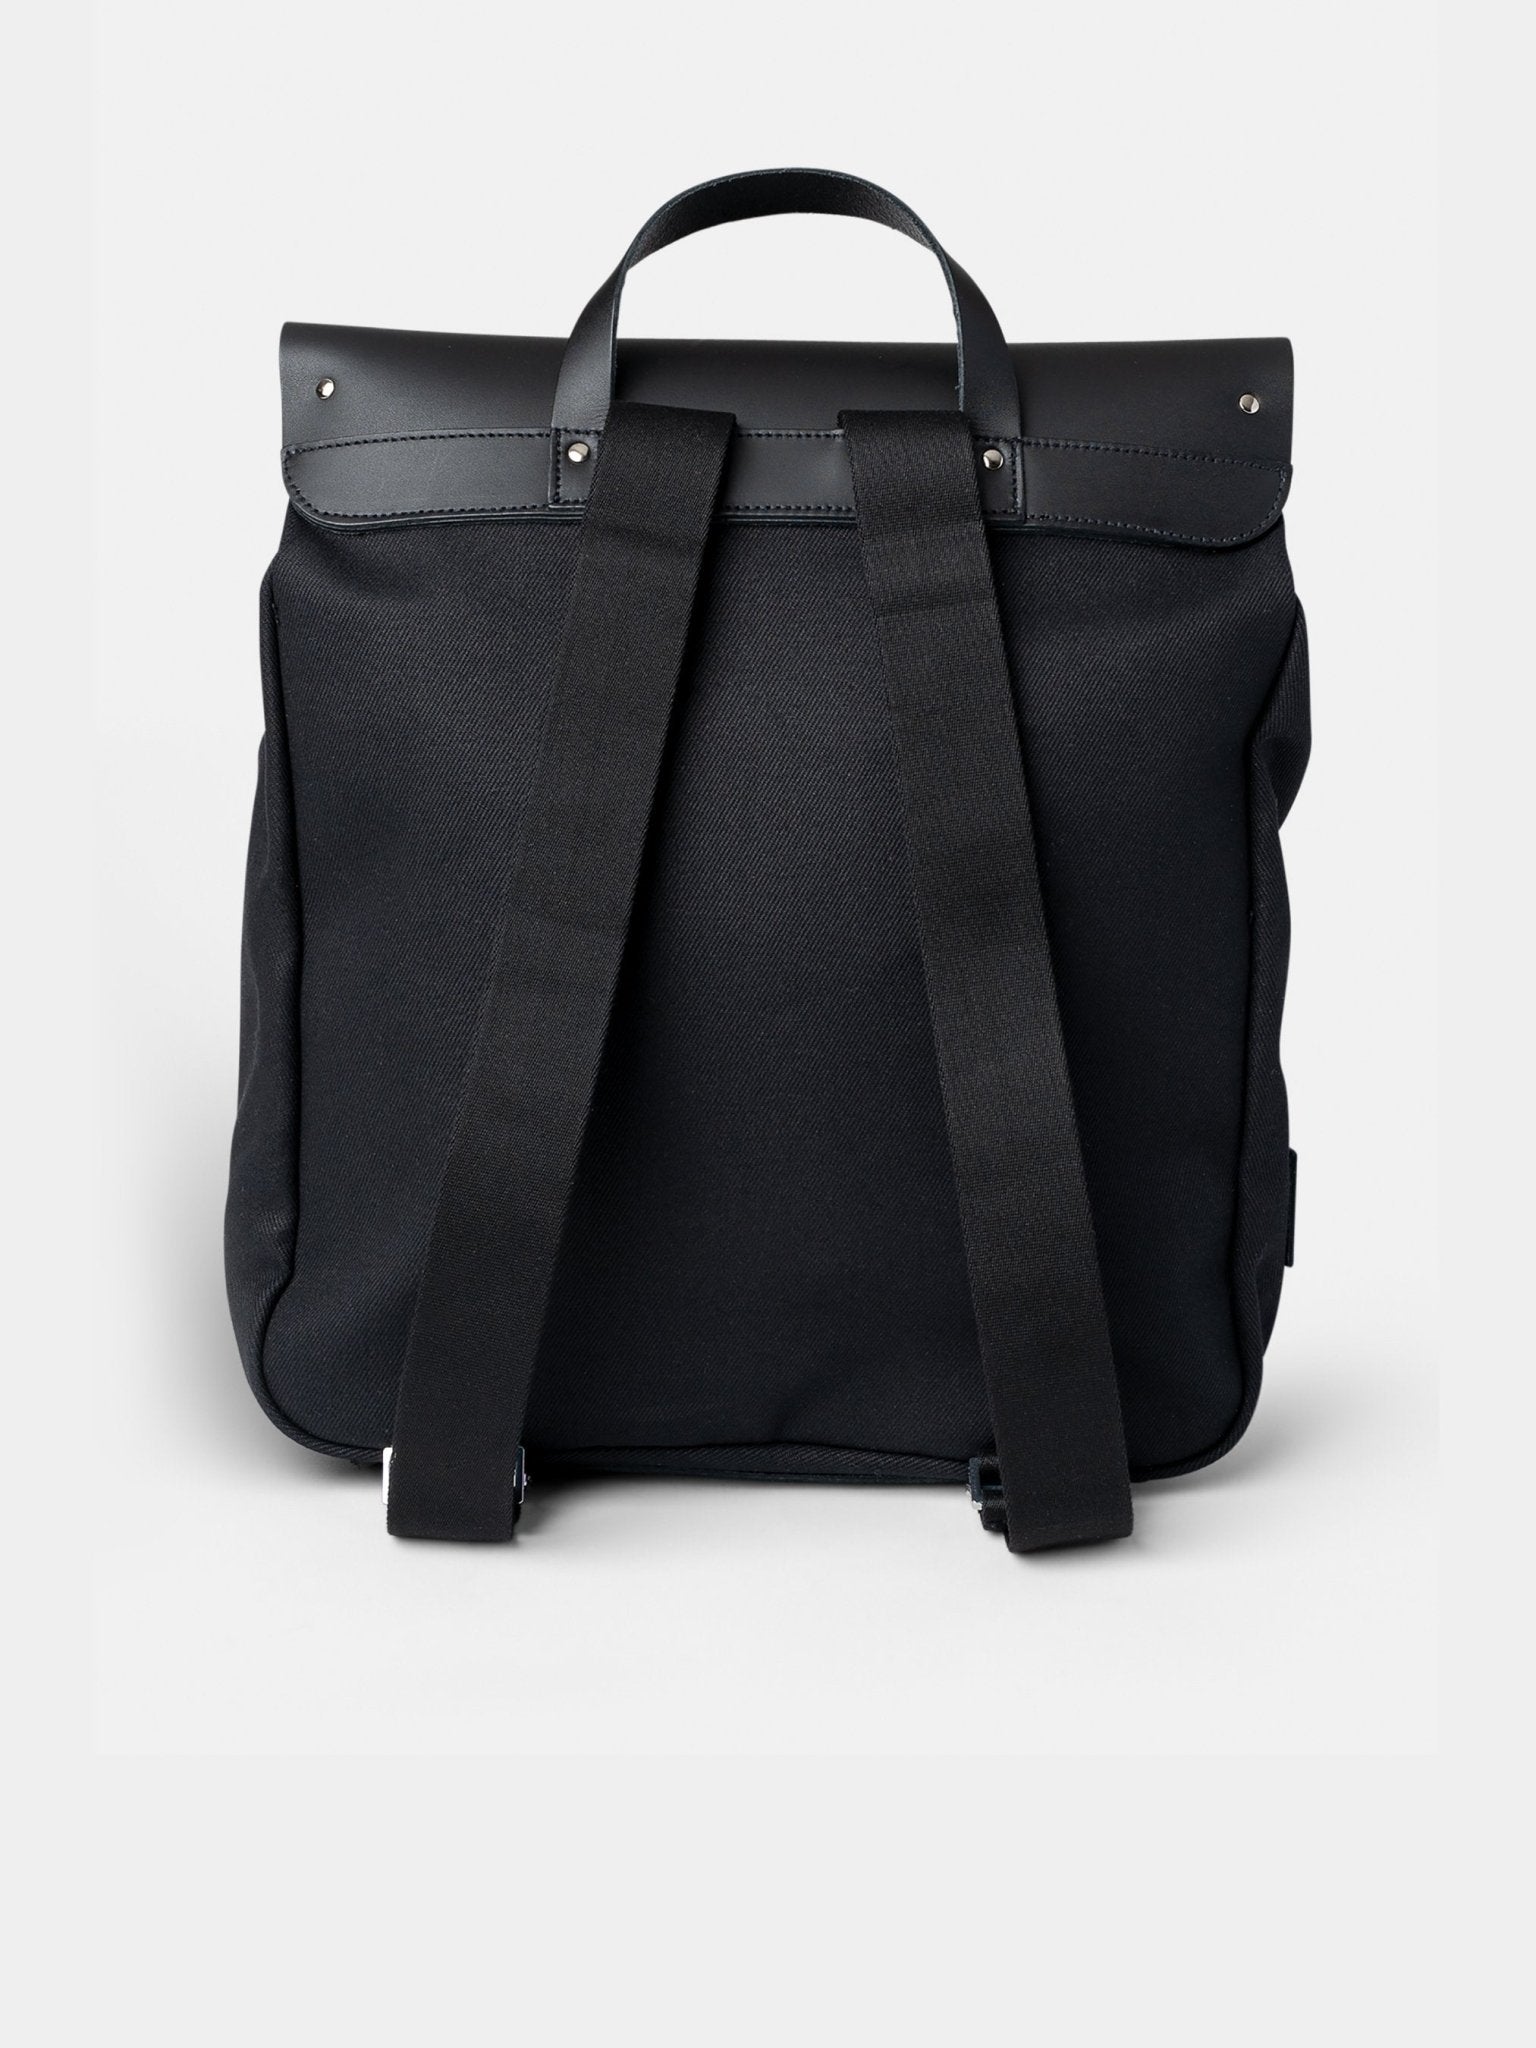 The Steamer Backpack - Black - The Cambridge Satchel Company EU Store